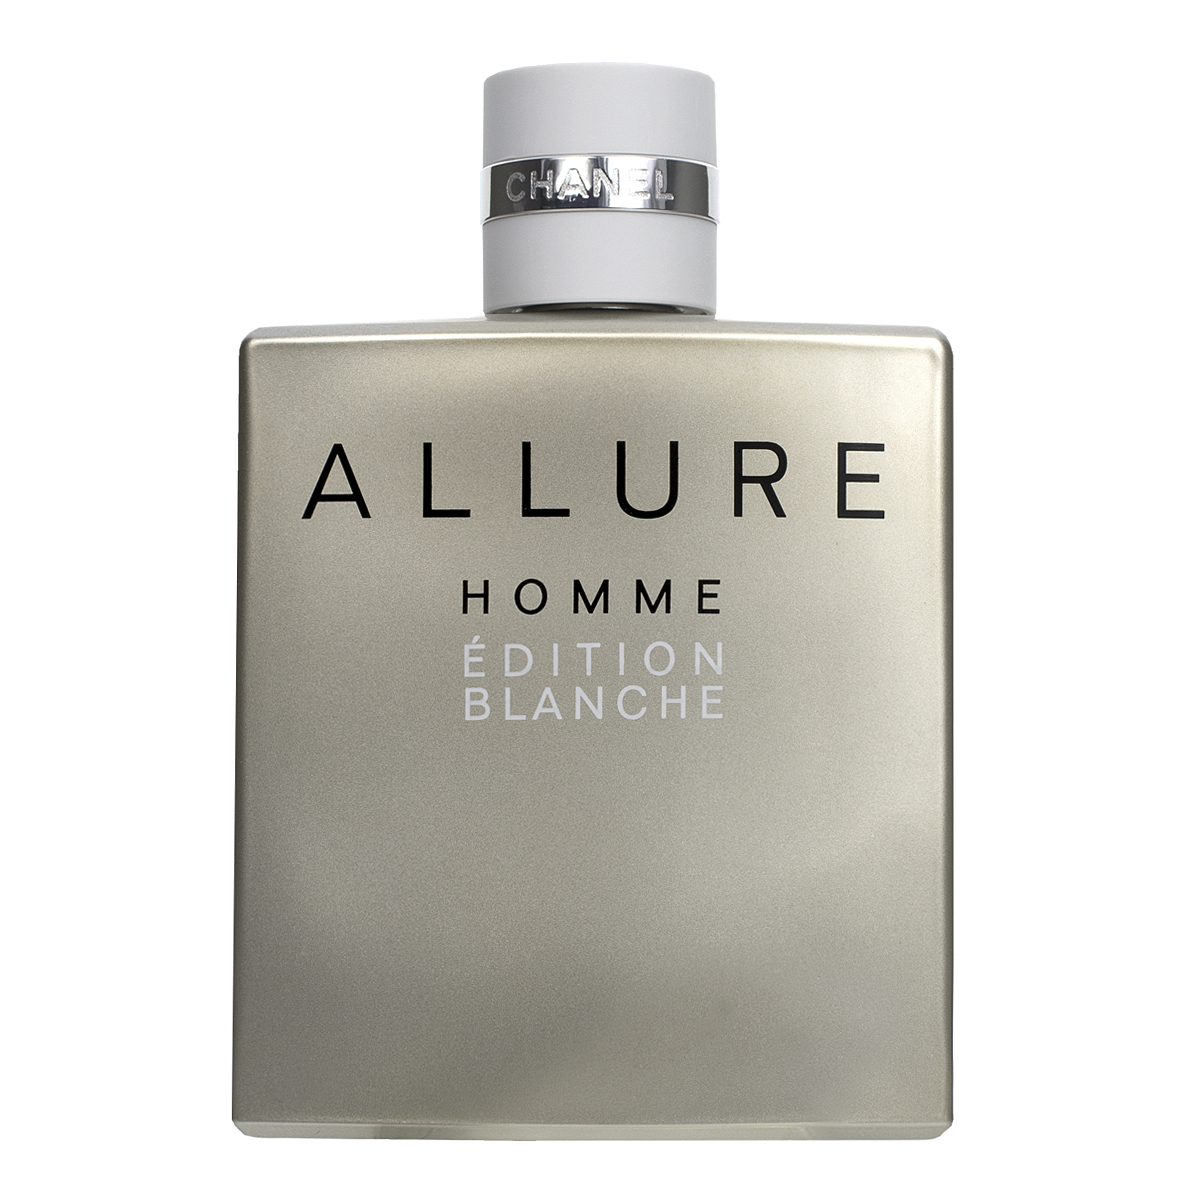 Chanel Allure Homme Blanche Edition Eau de Parfum Spray 150ml